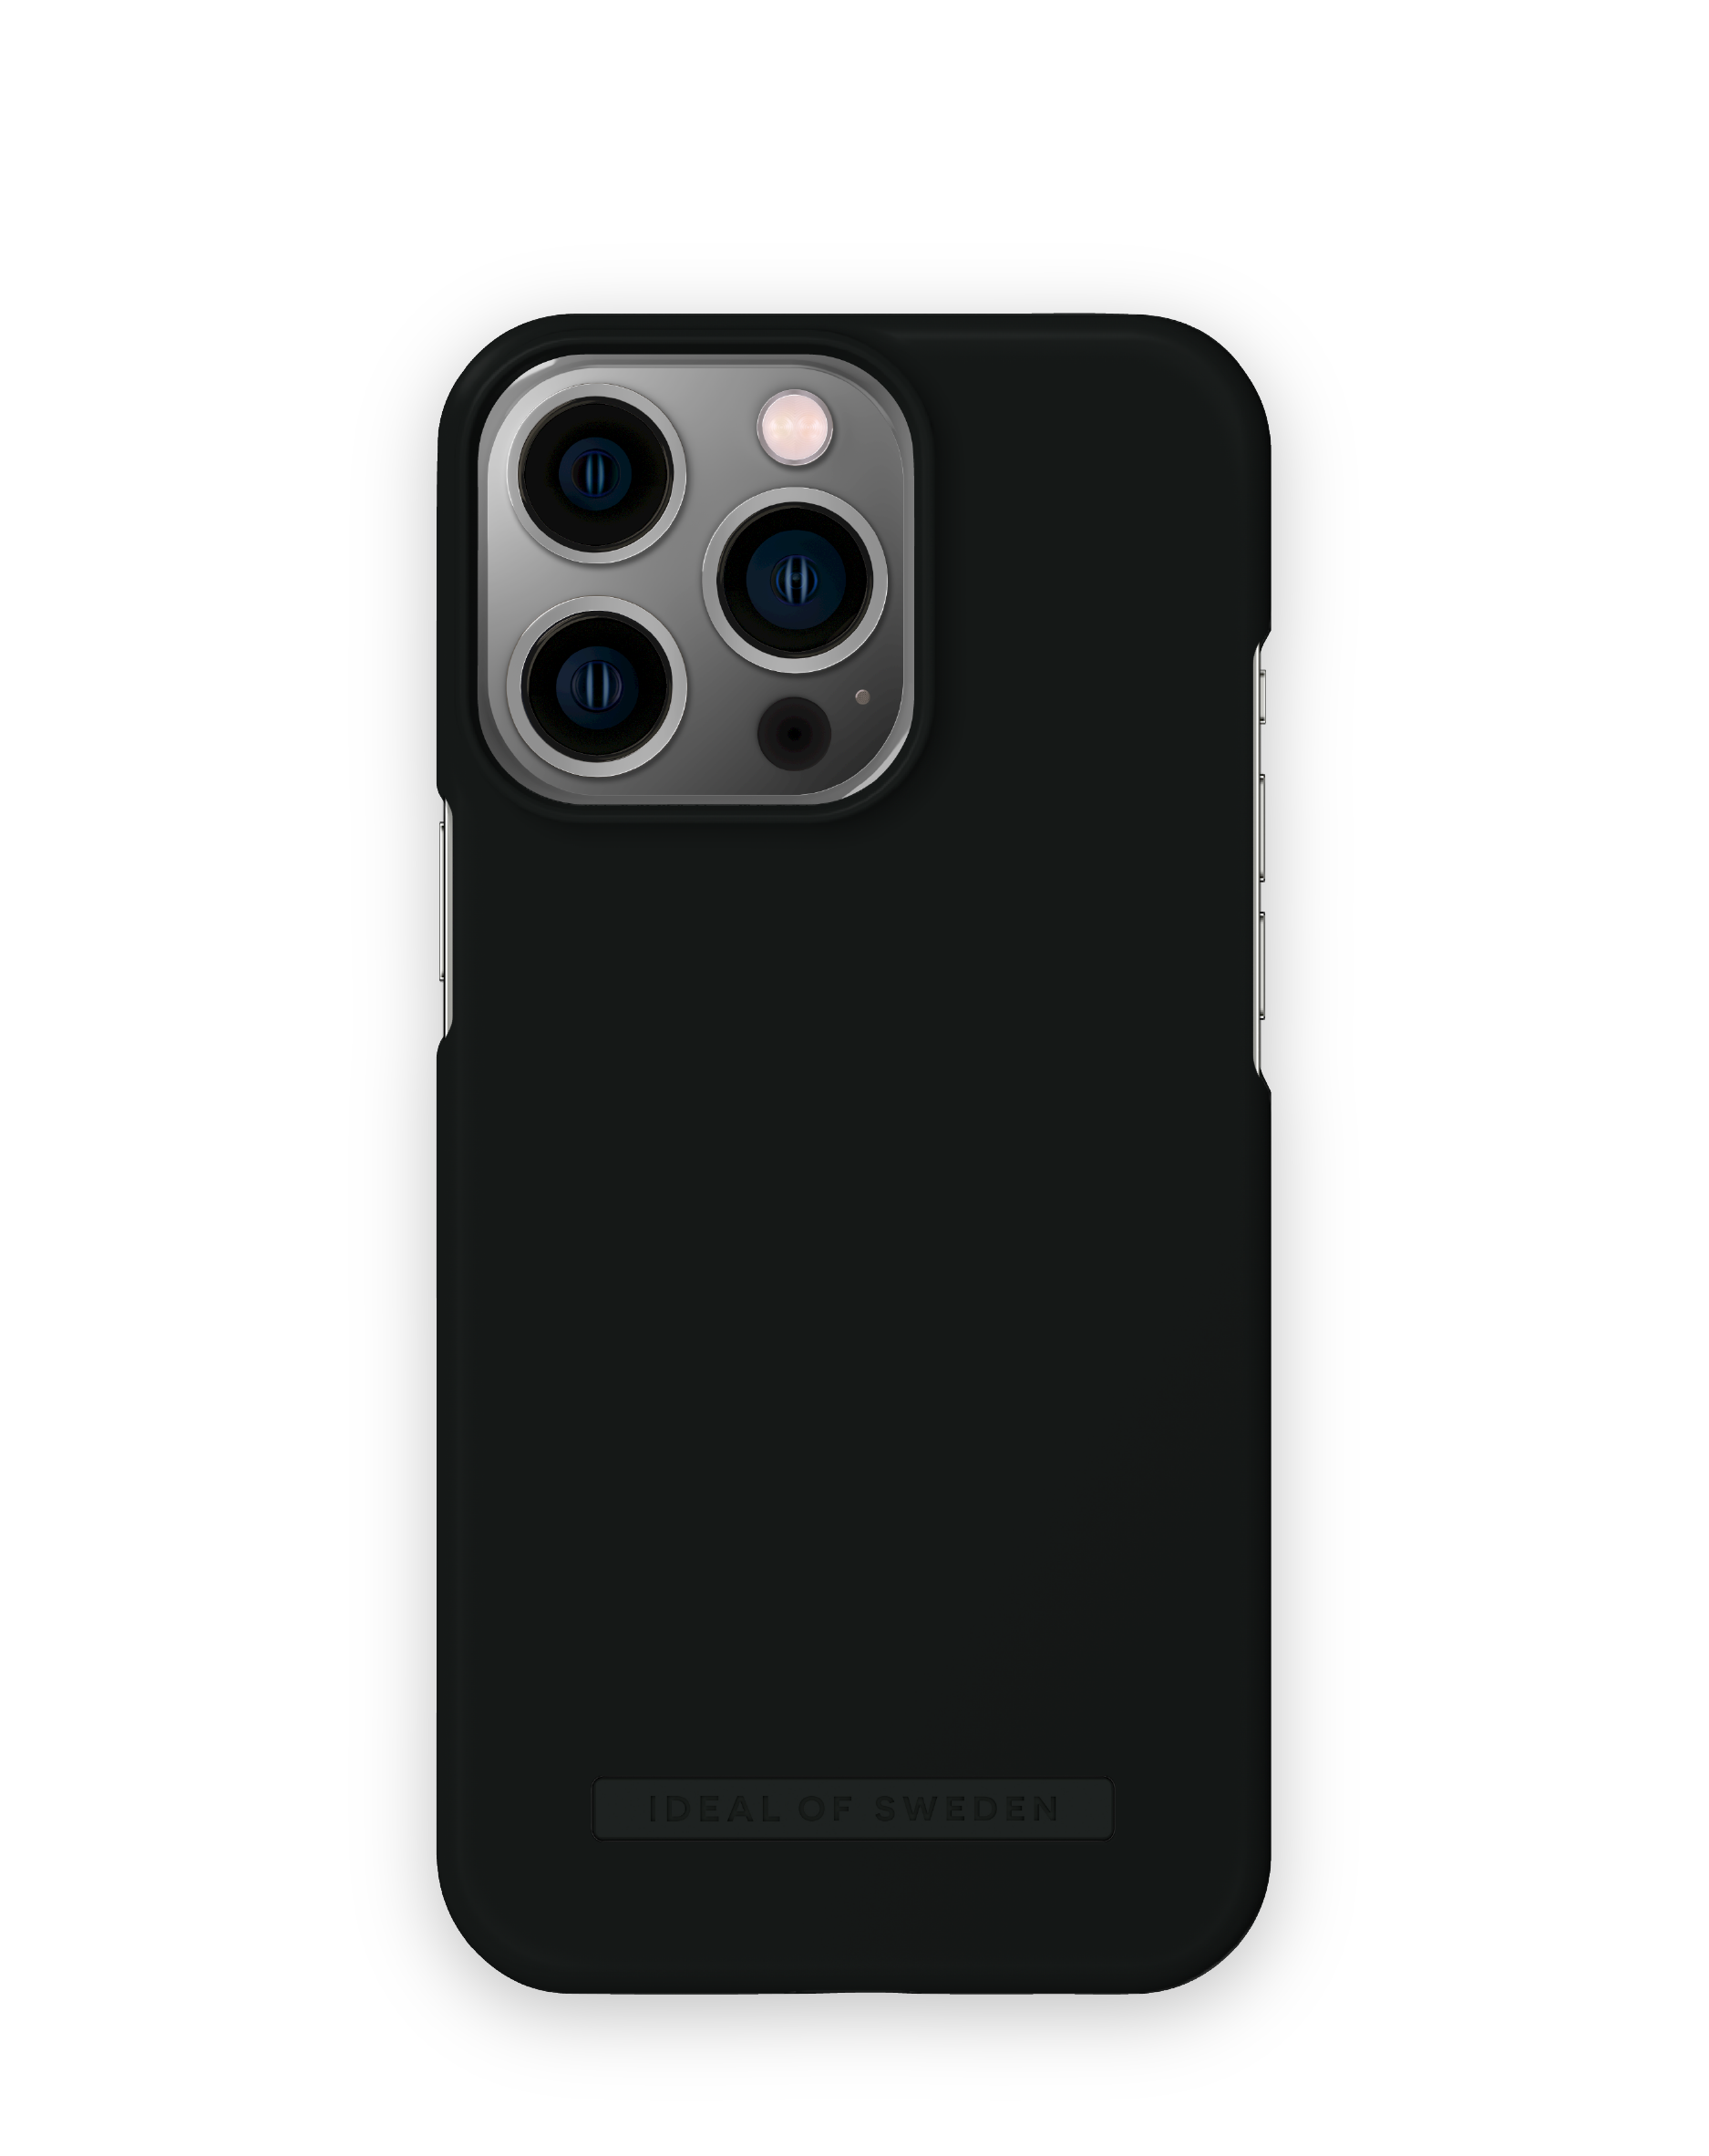 IDEAL OF iPhone SWEDEN Black Coal Pro, IDFCMTE22-I2261P-407, 14 Apple, Backcover